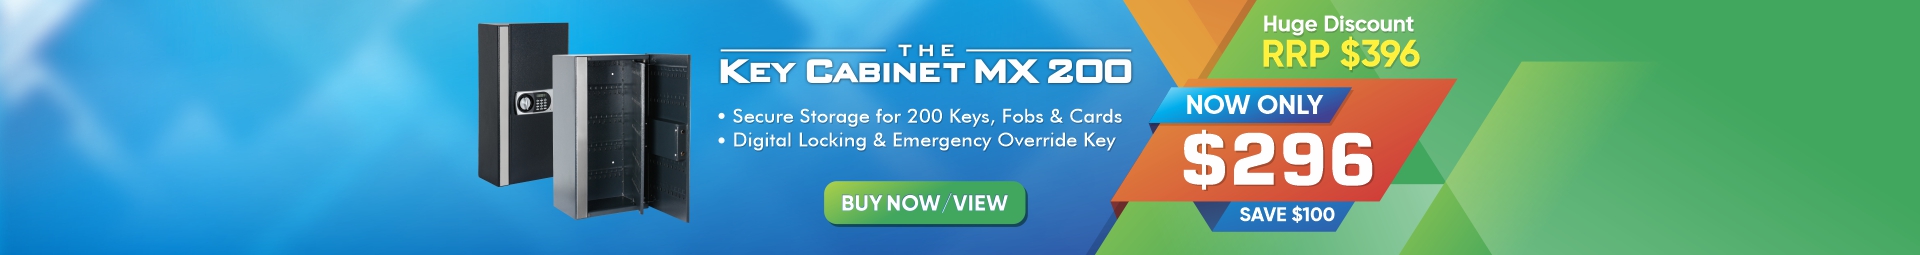 Key Cabinet MX 200 Sale - Save $100